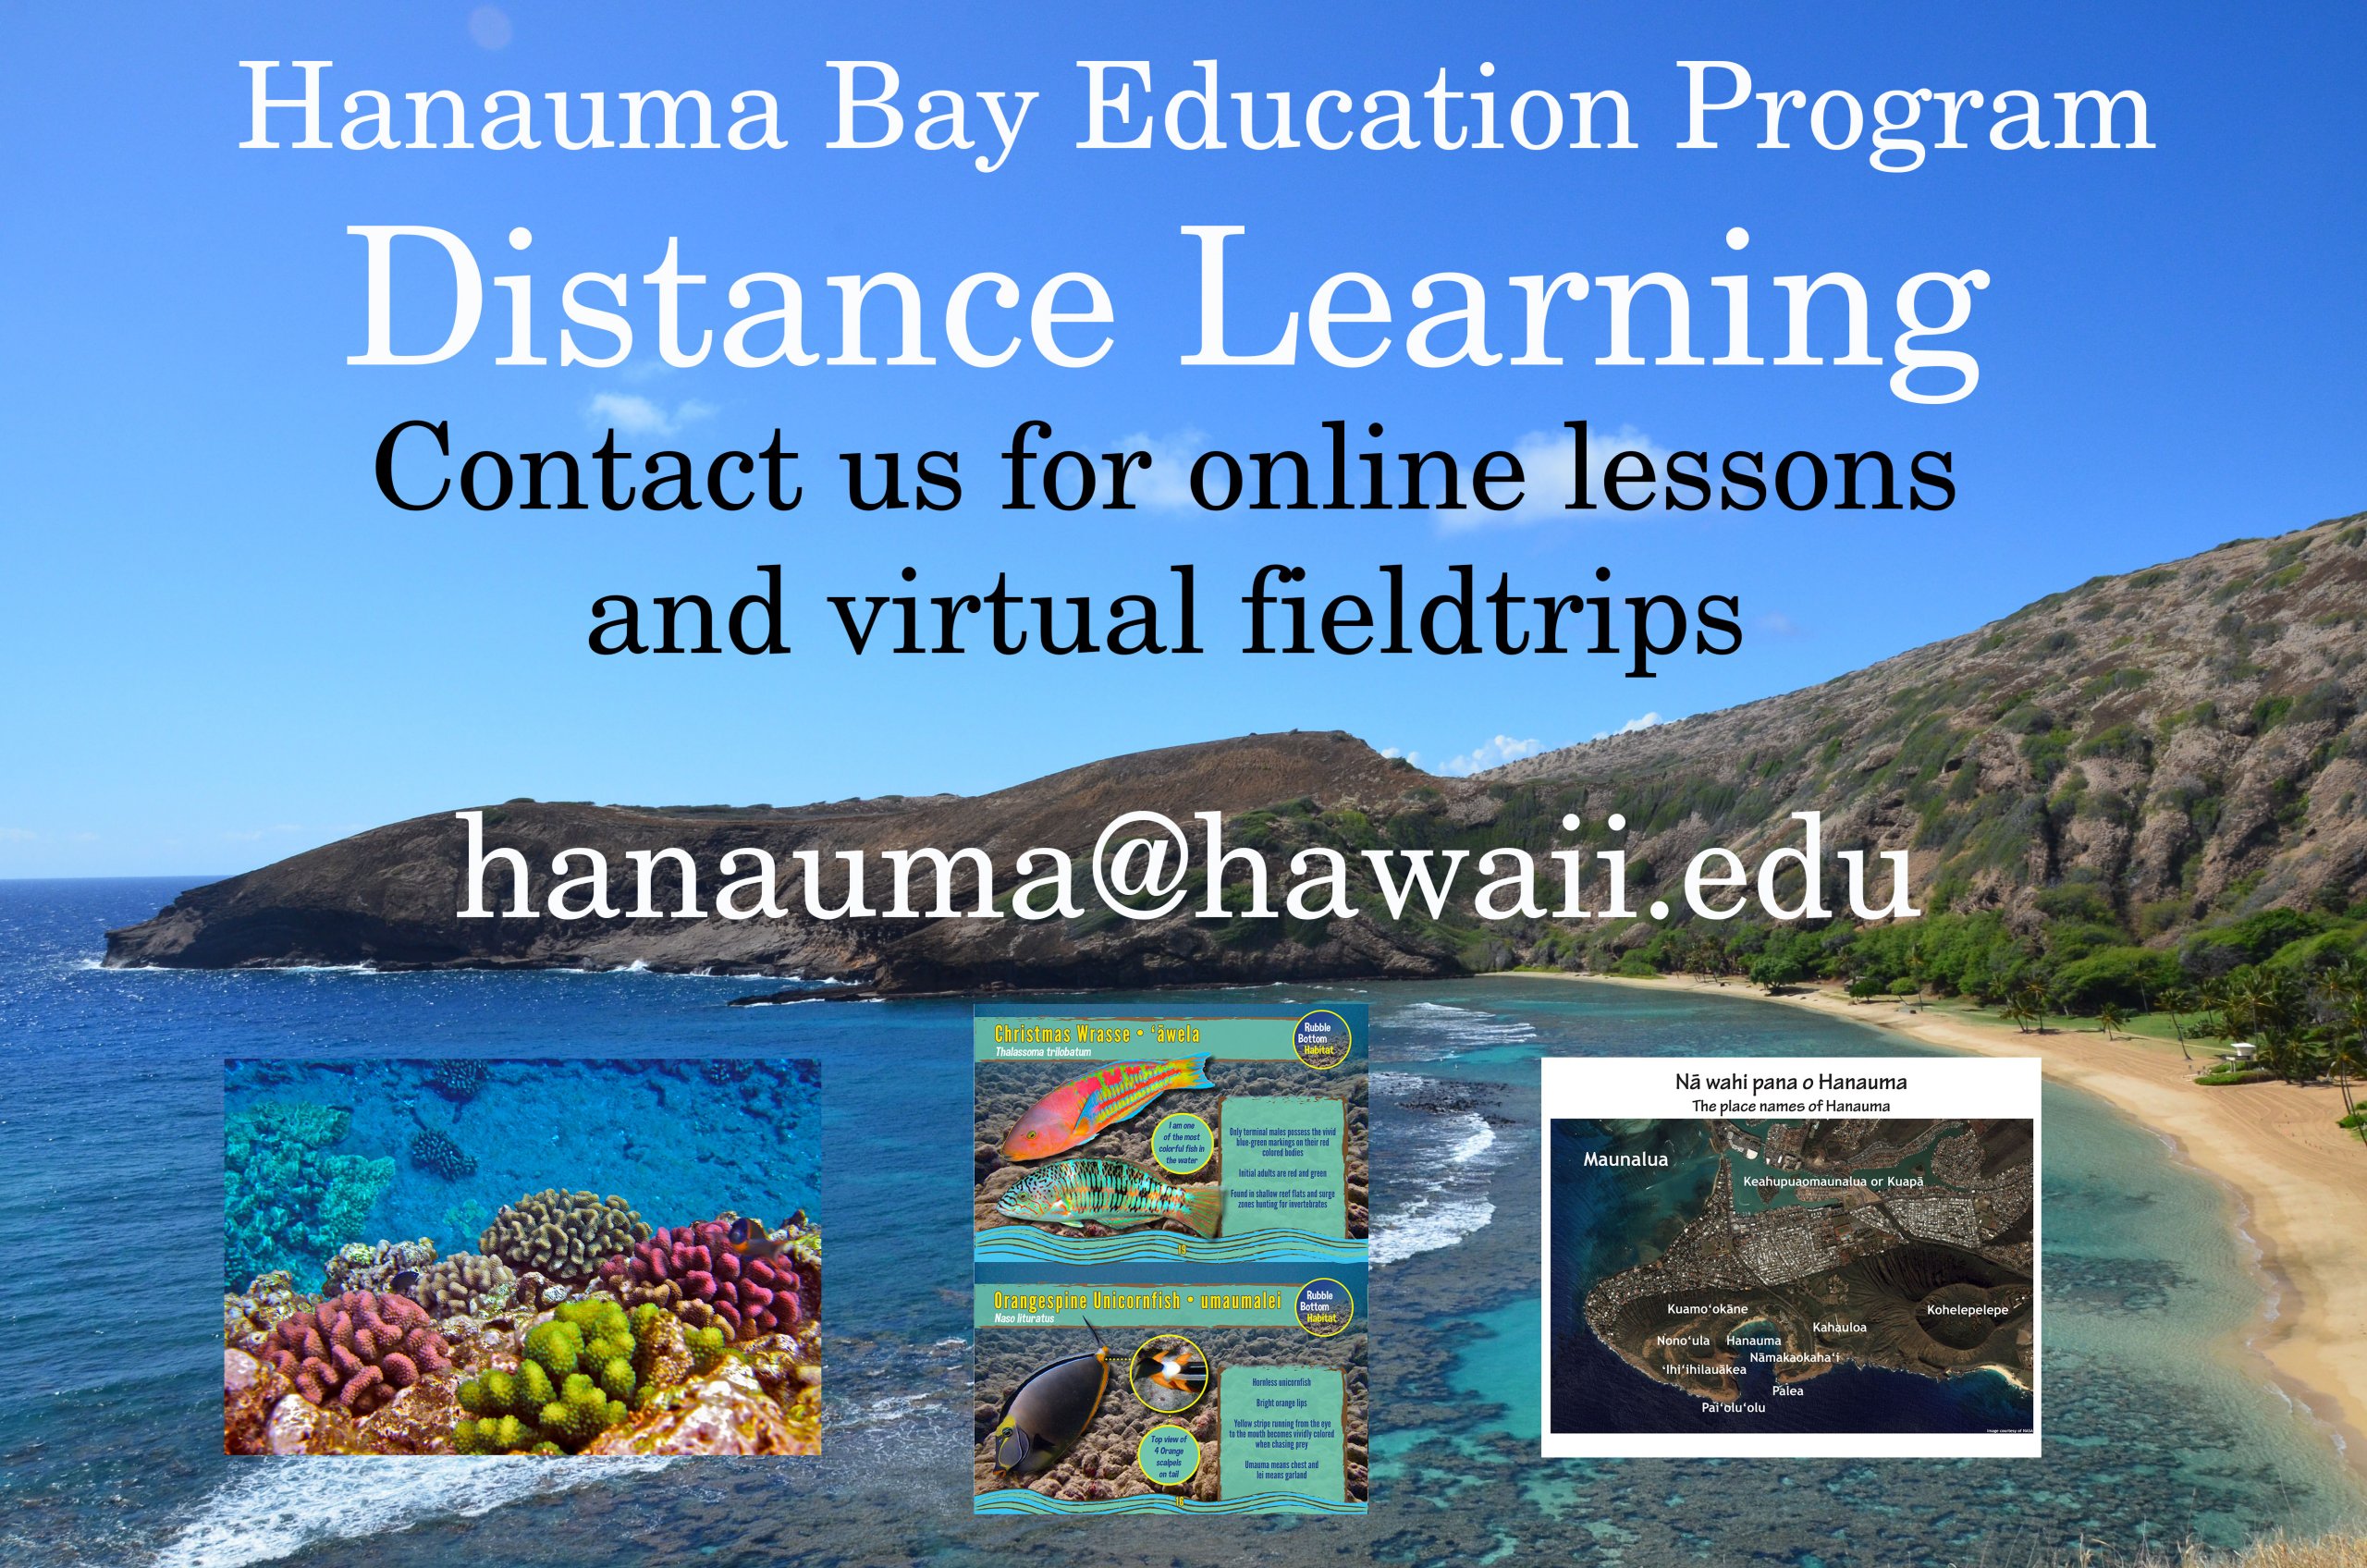 Contact us for online lessons and virtual fieldtrips hanauma@hawaii.edu